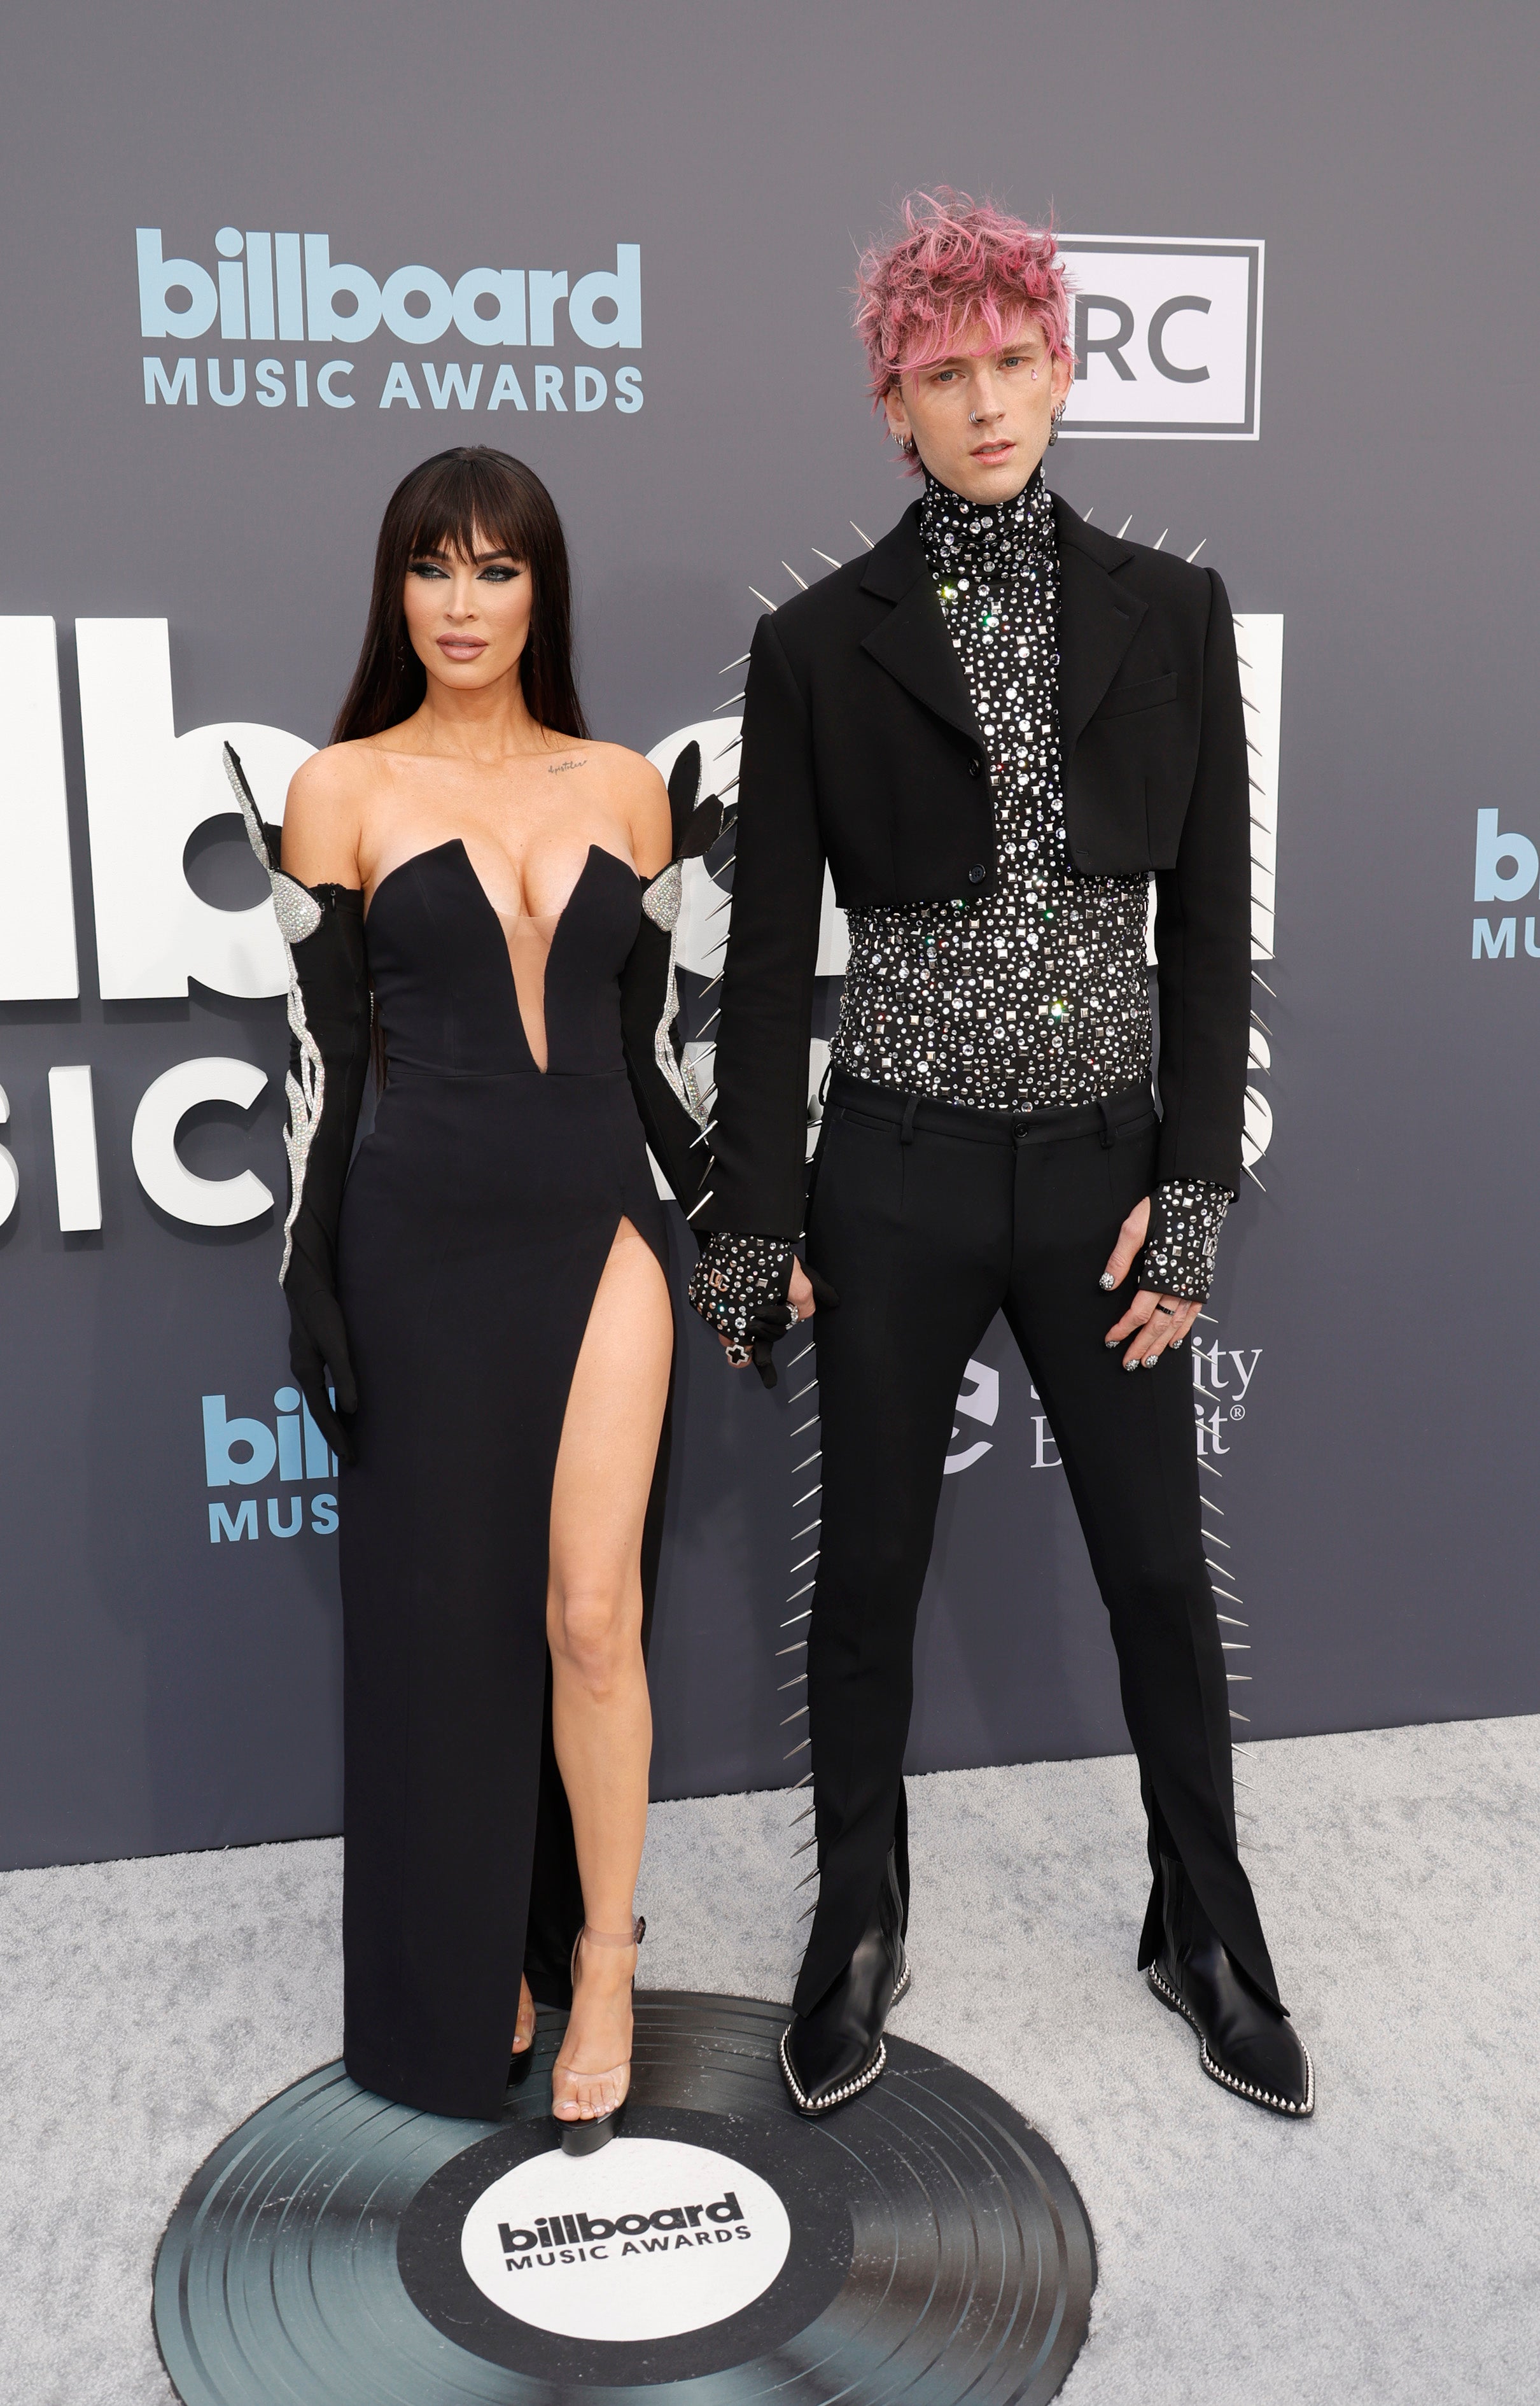 MGK and Megan Fox pose on red carpet at Billboard Music Awards